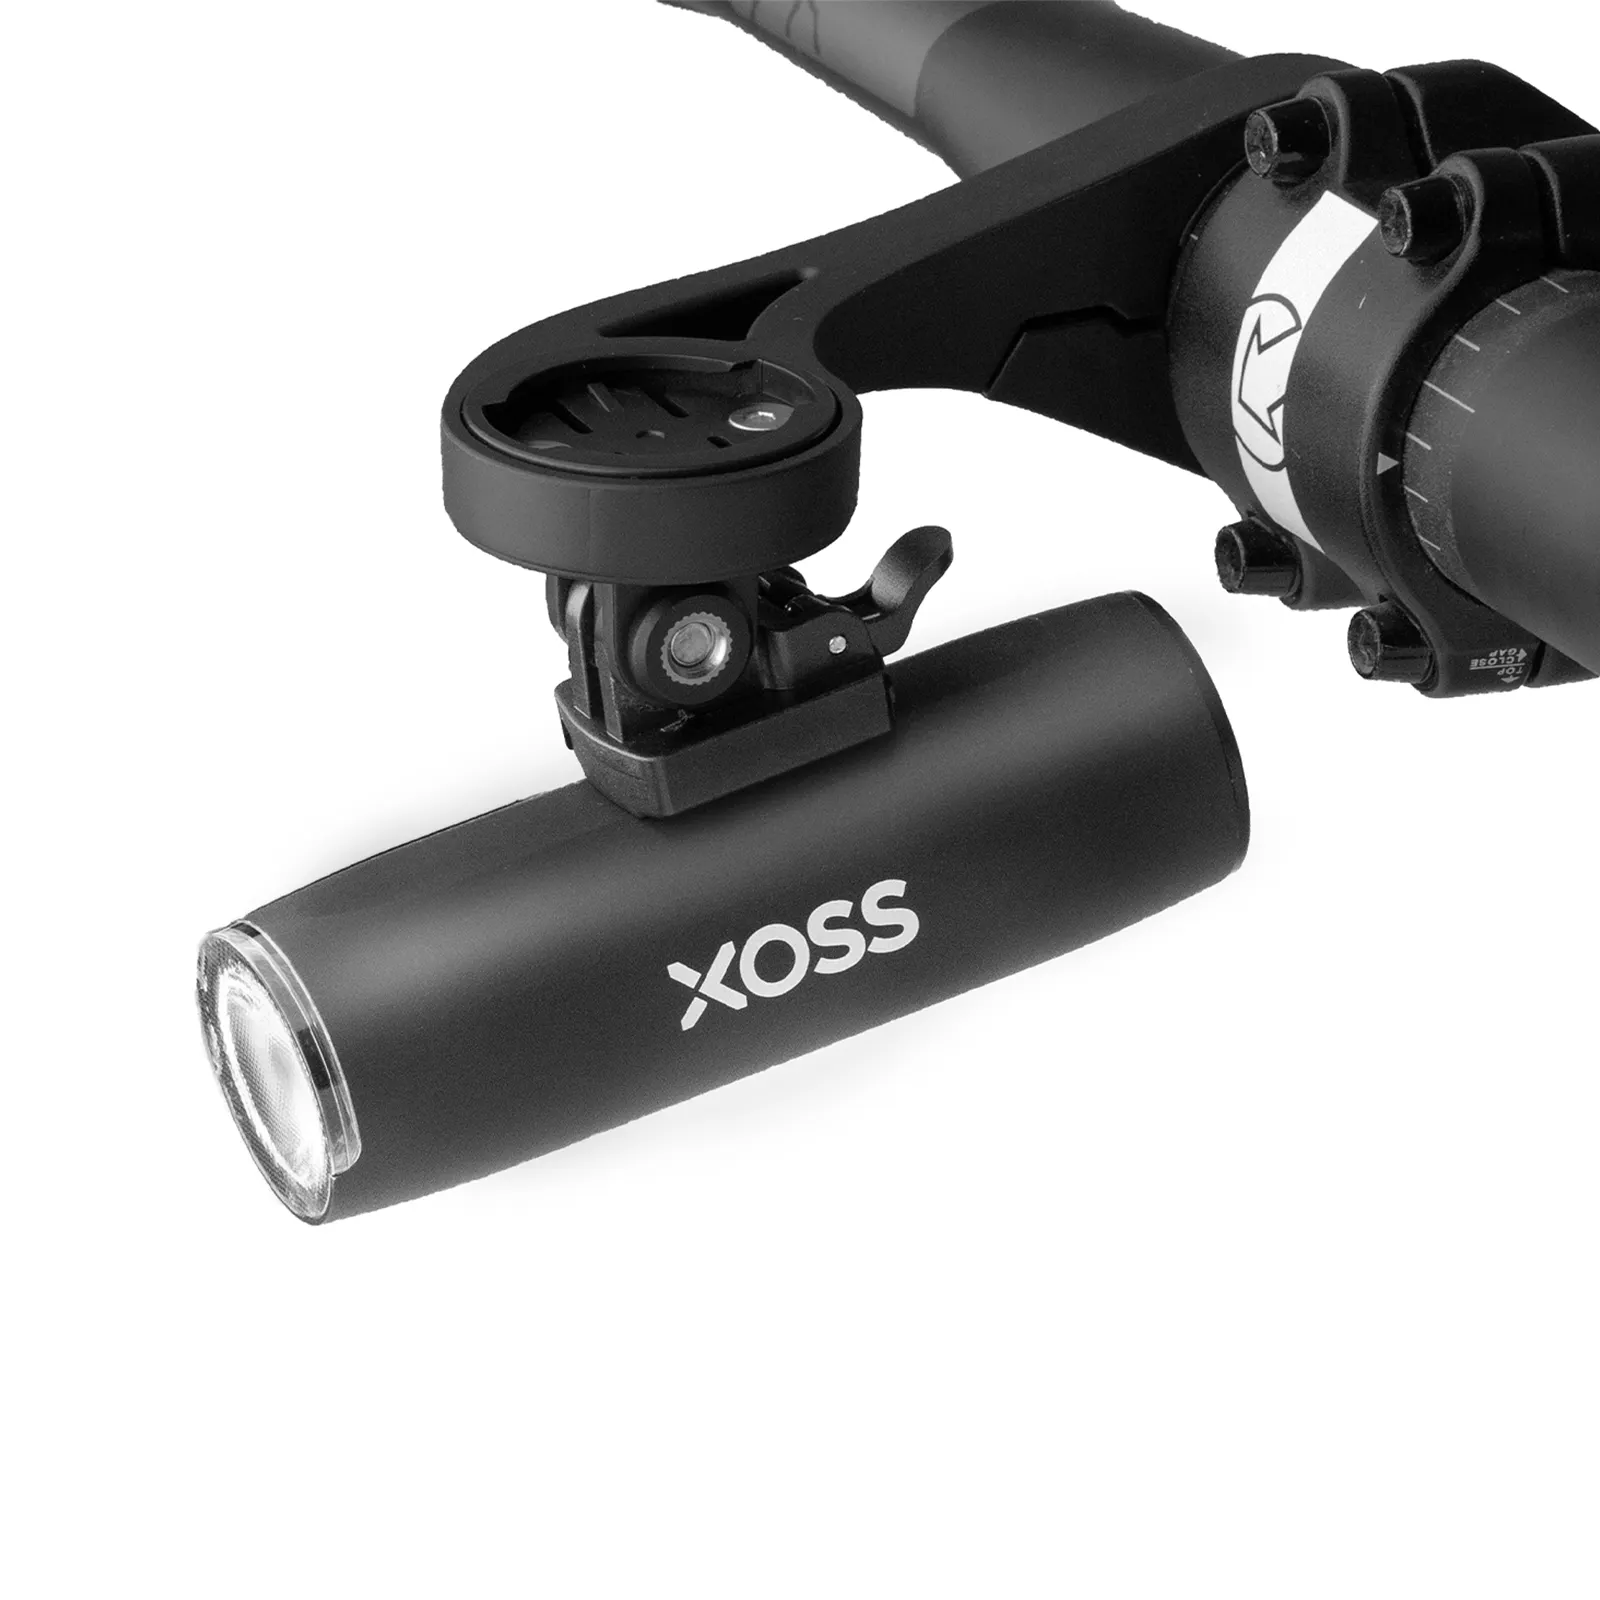 XOSS Bike Light Headlight Waterproof USB Rechargeable MTB Front Lamp Bicycle Flash Light